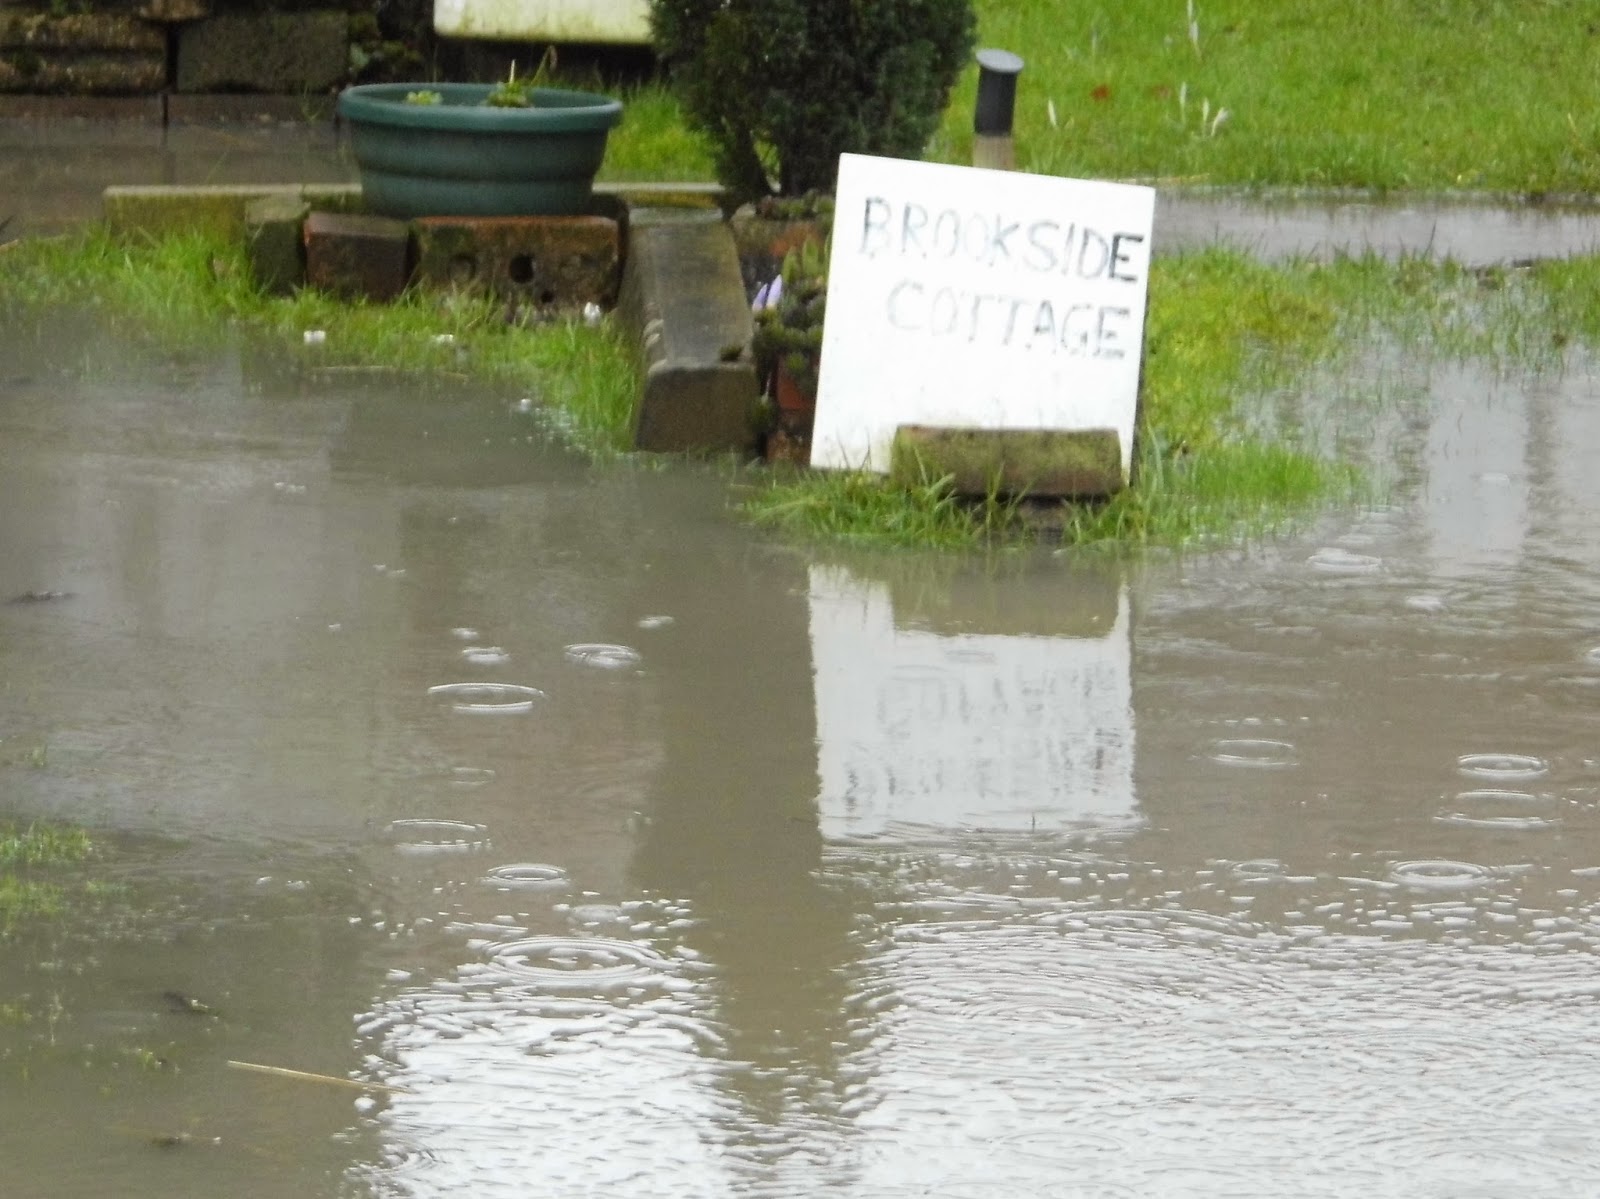 Old Buckenham blog: Flooding in Old Buckenham...